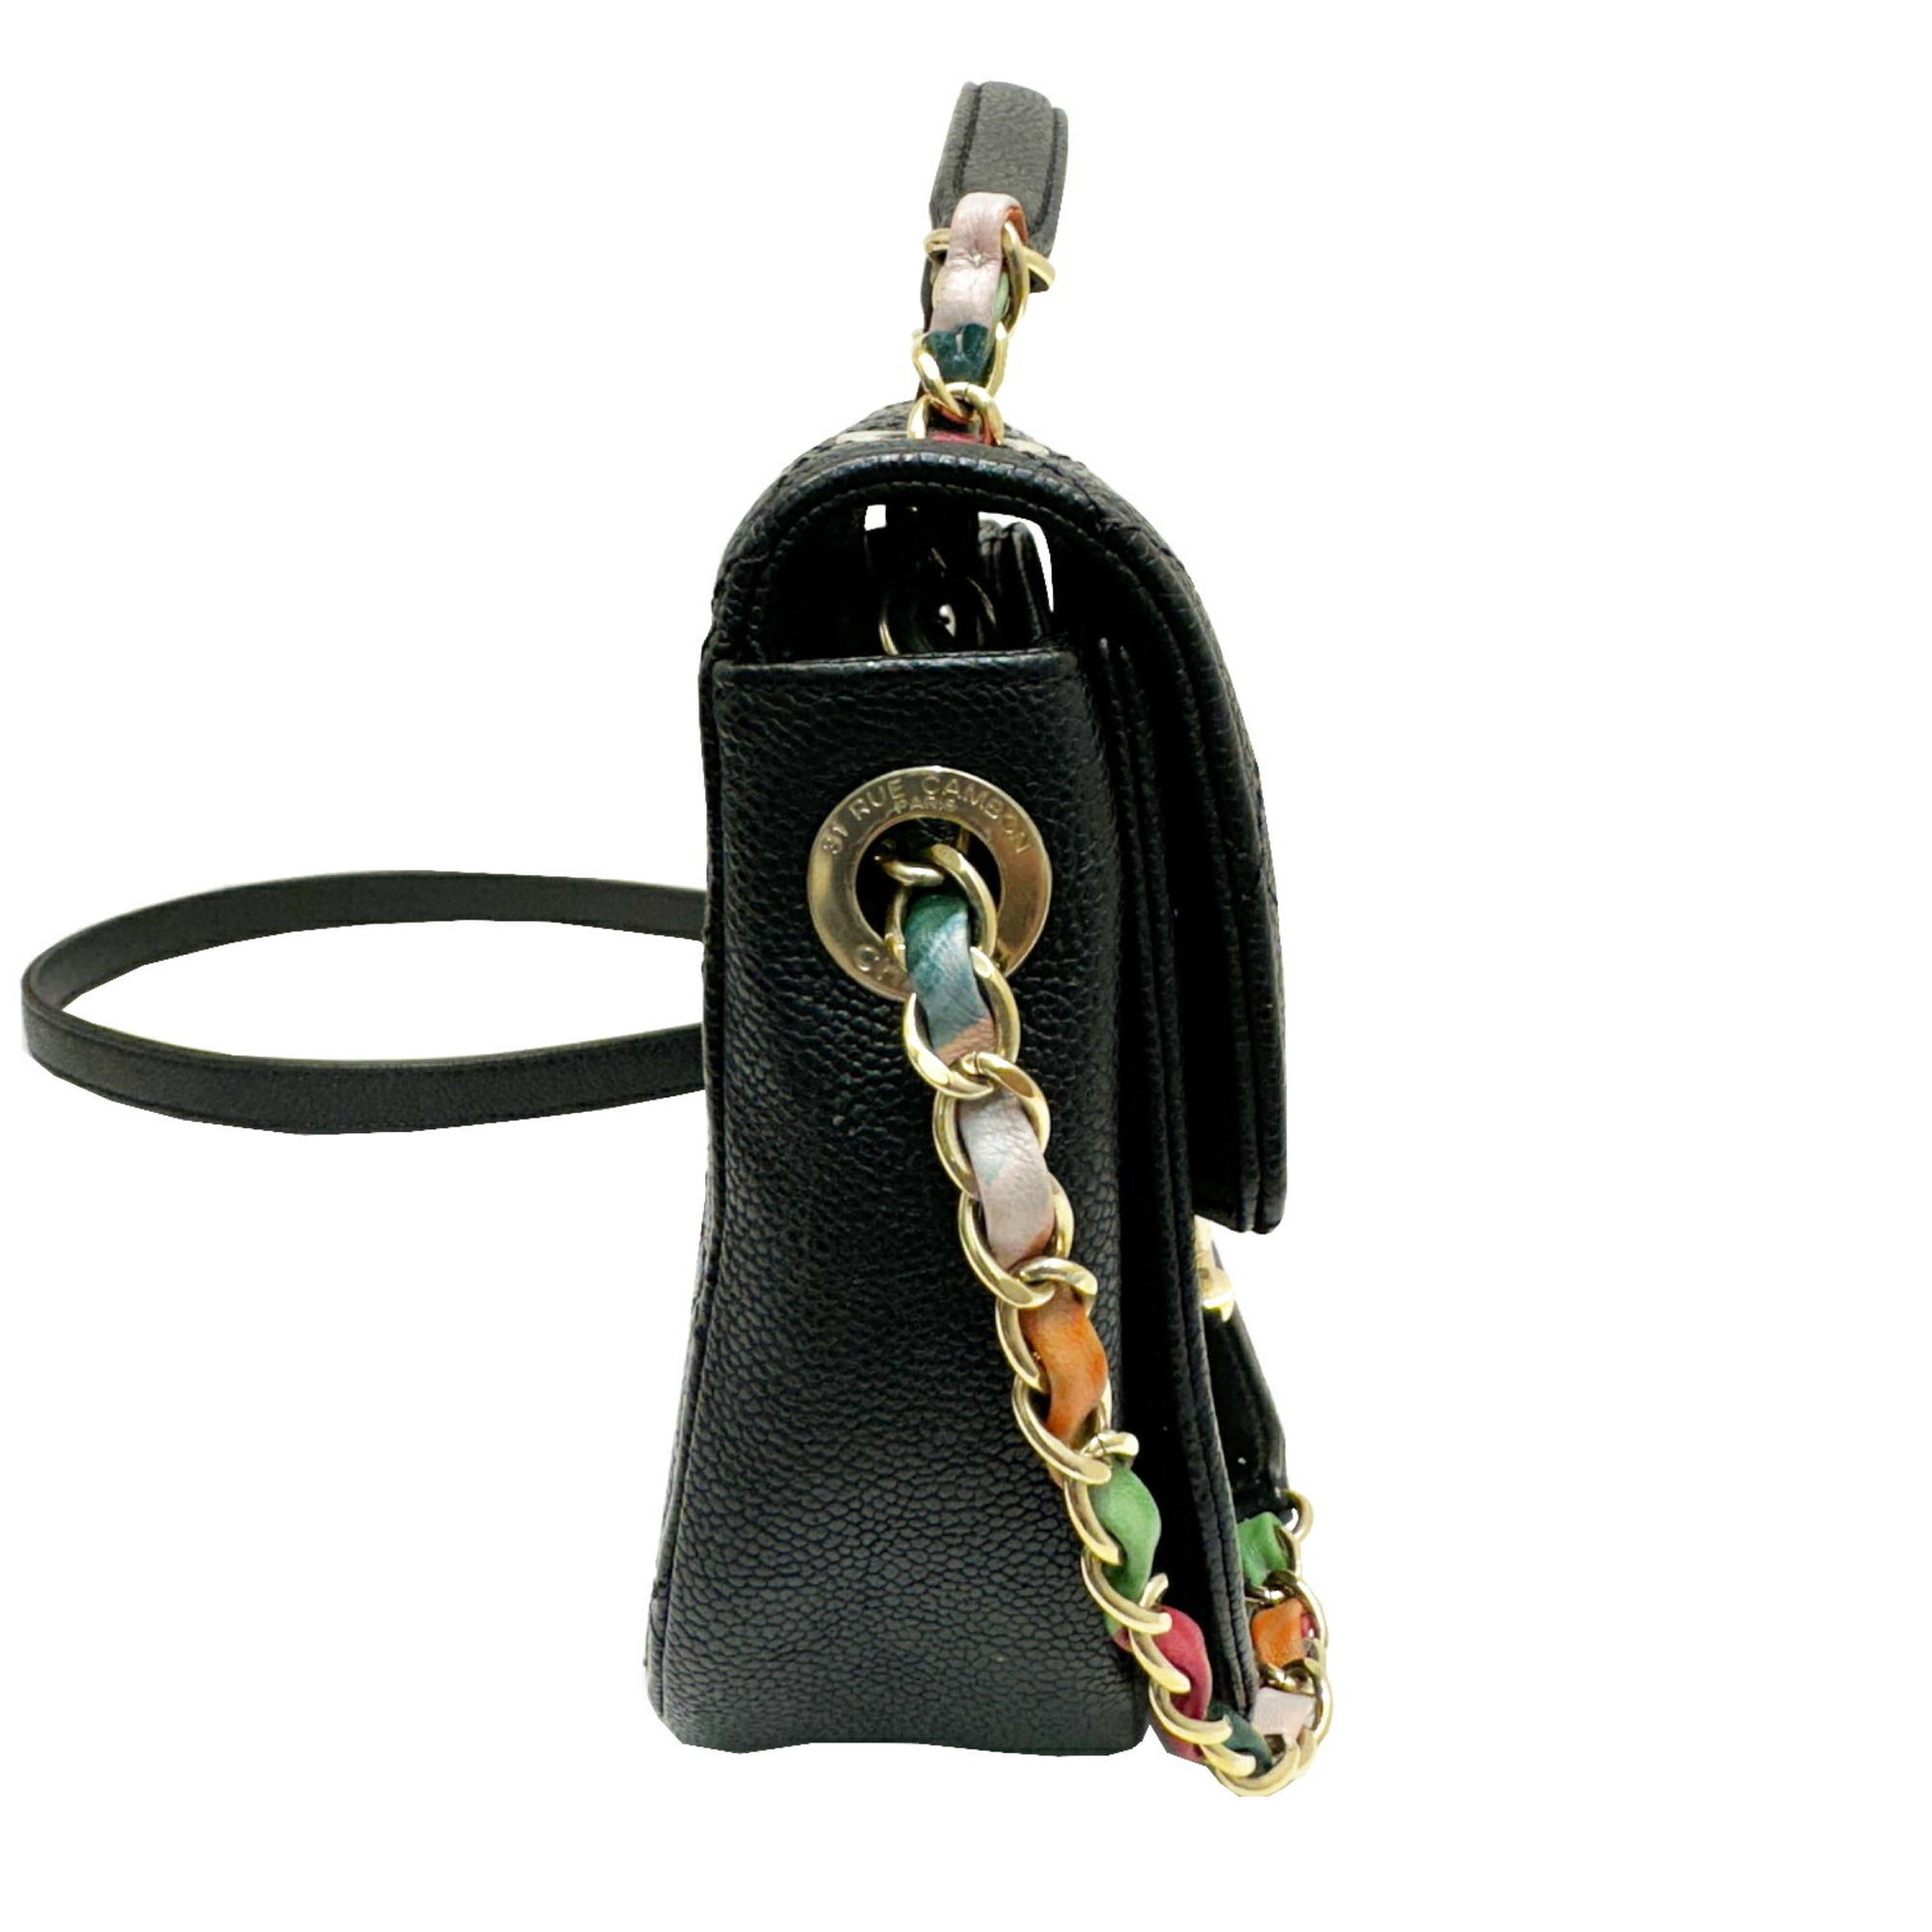 CHANEL Chanel Matelasse Chain Shoulder Coco Mark Caviar Skin Black A93660 23 Series Handbag Bag Women's